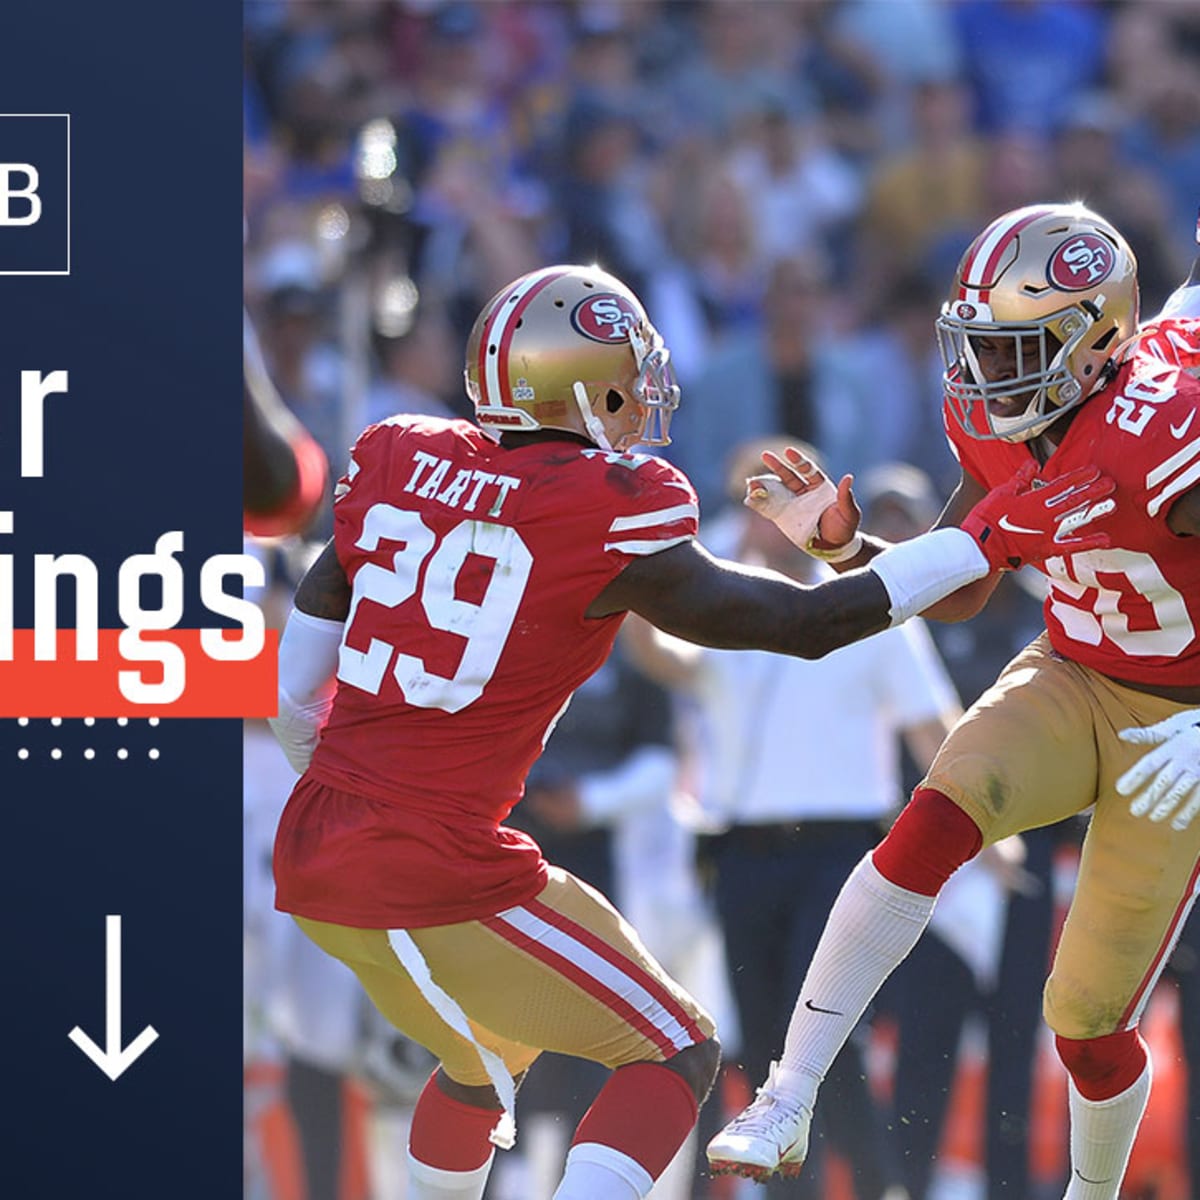 NFL Power Rankings Week 7 - 1-32 poll, plus tracking each team's